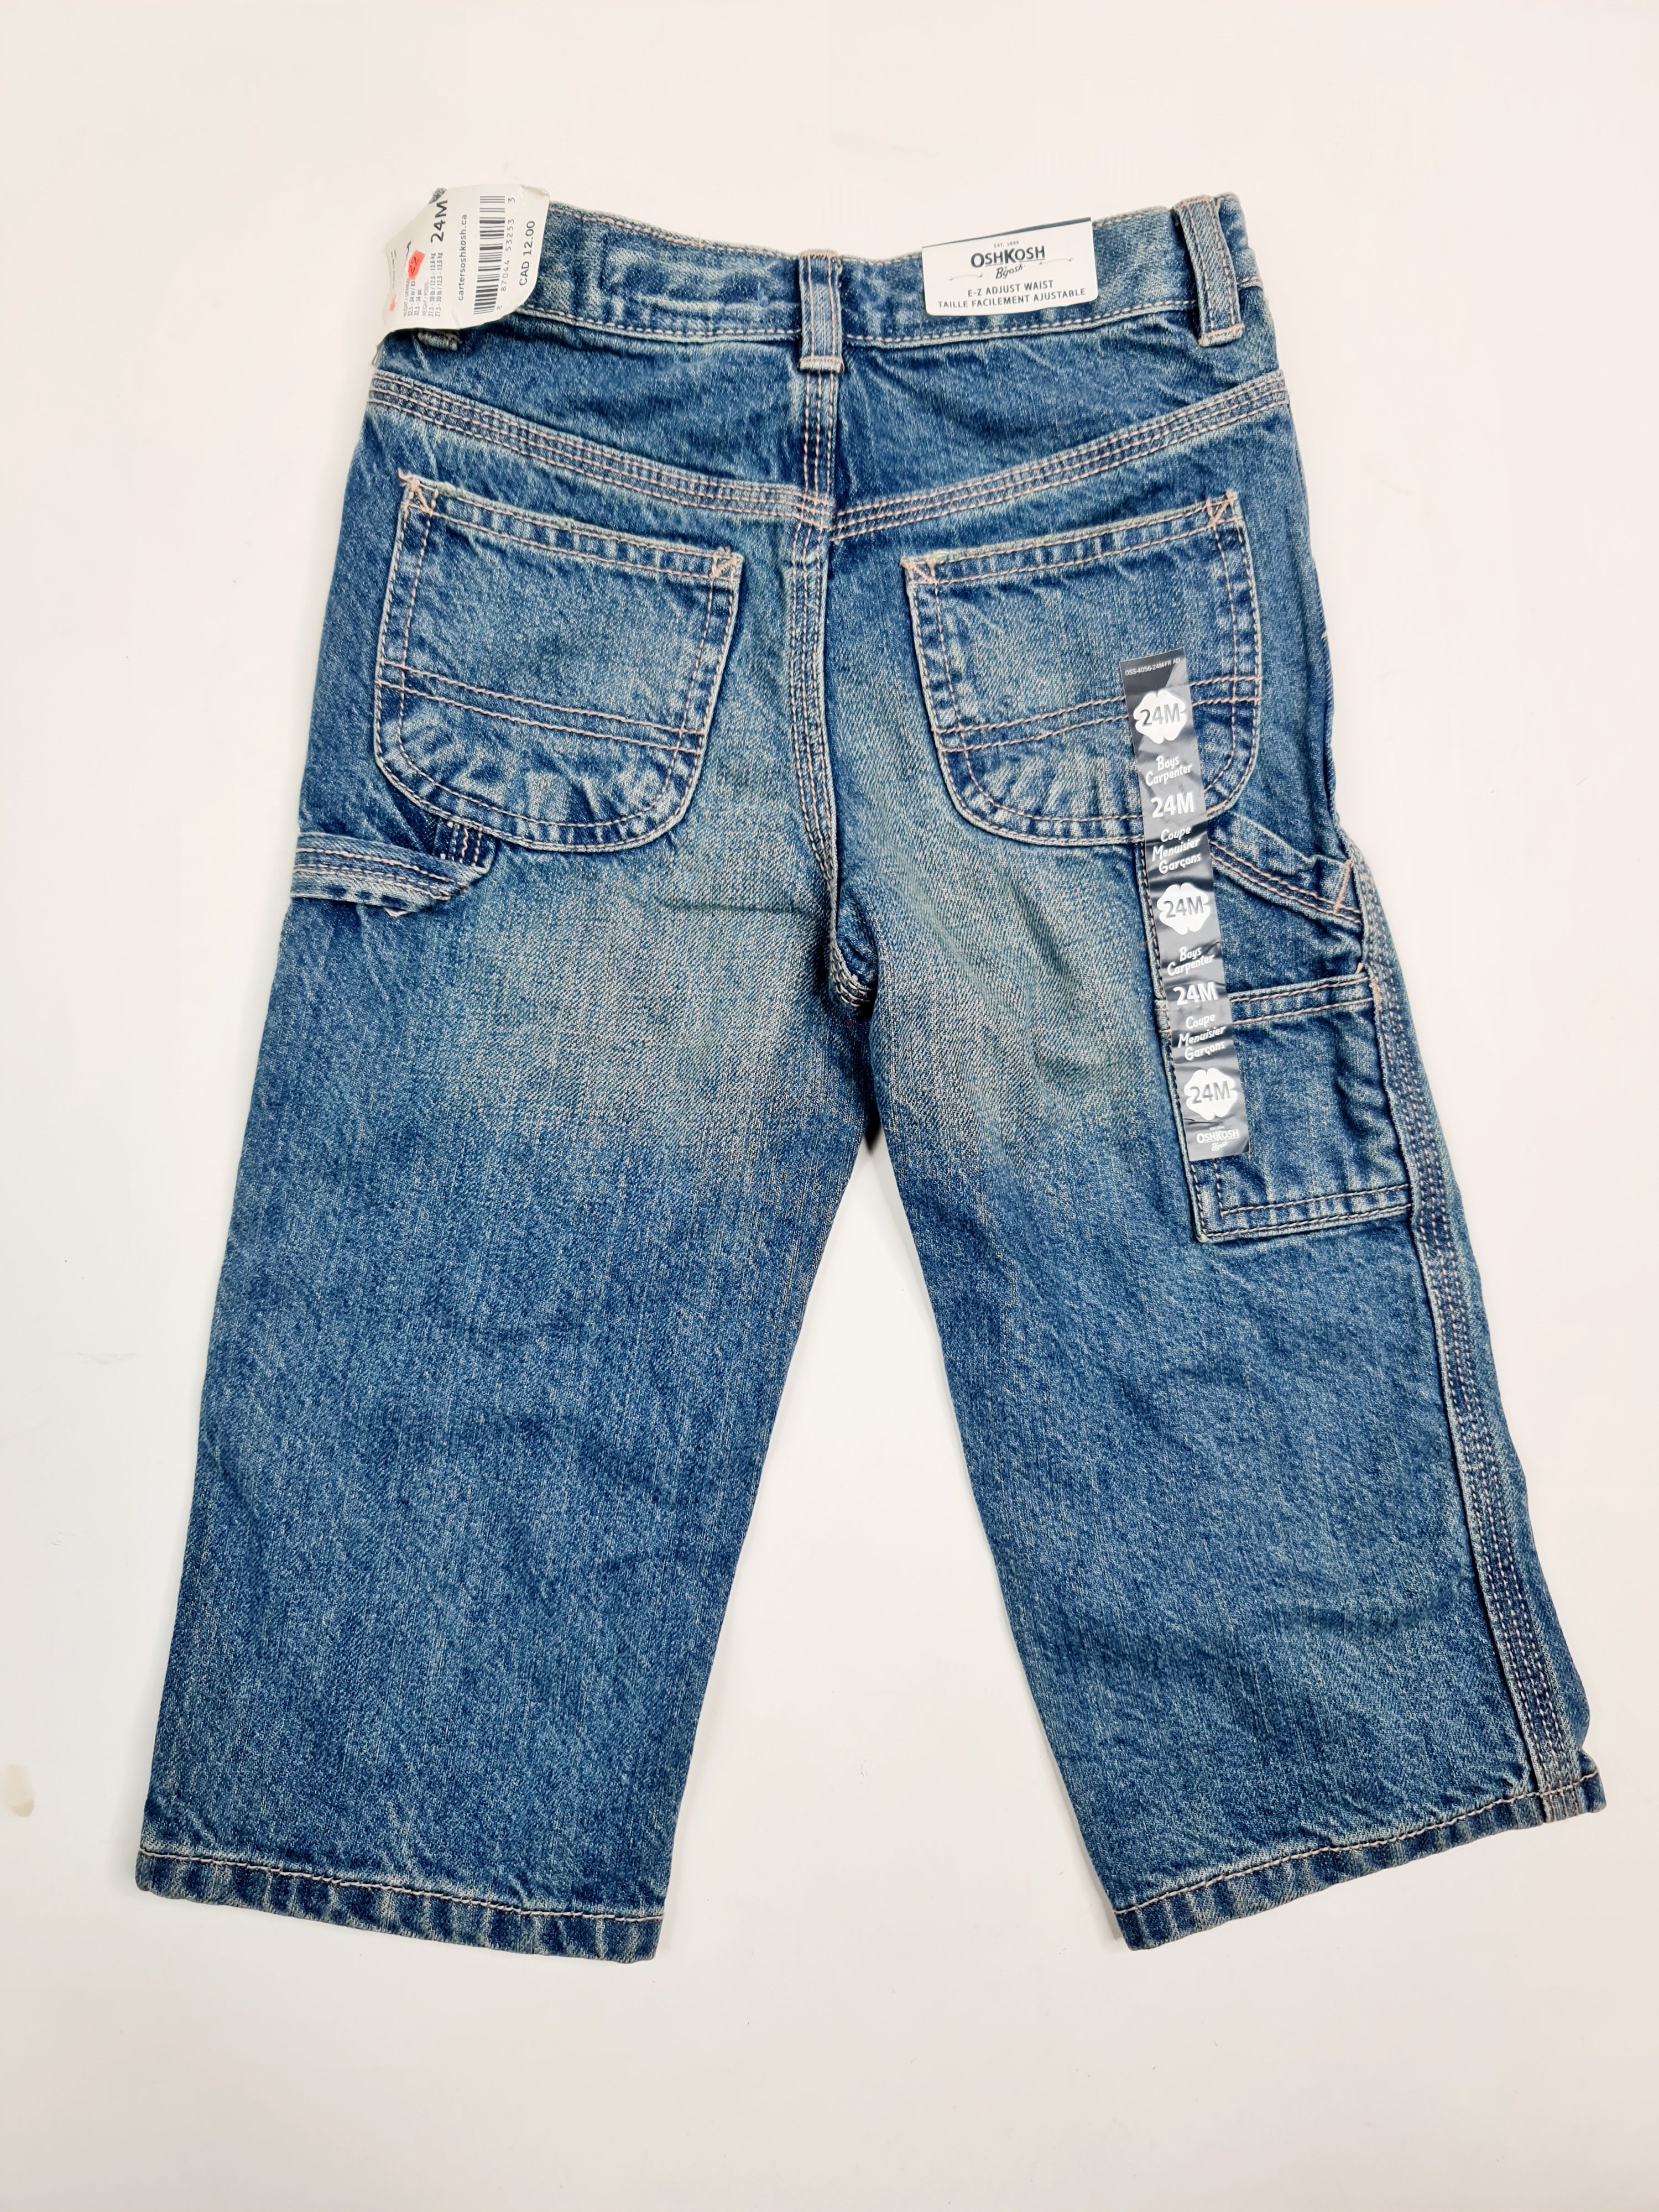 Pantalones jeans marca OshKosh Bgosh niño 24 meses